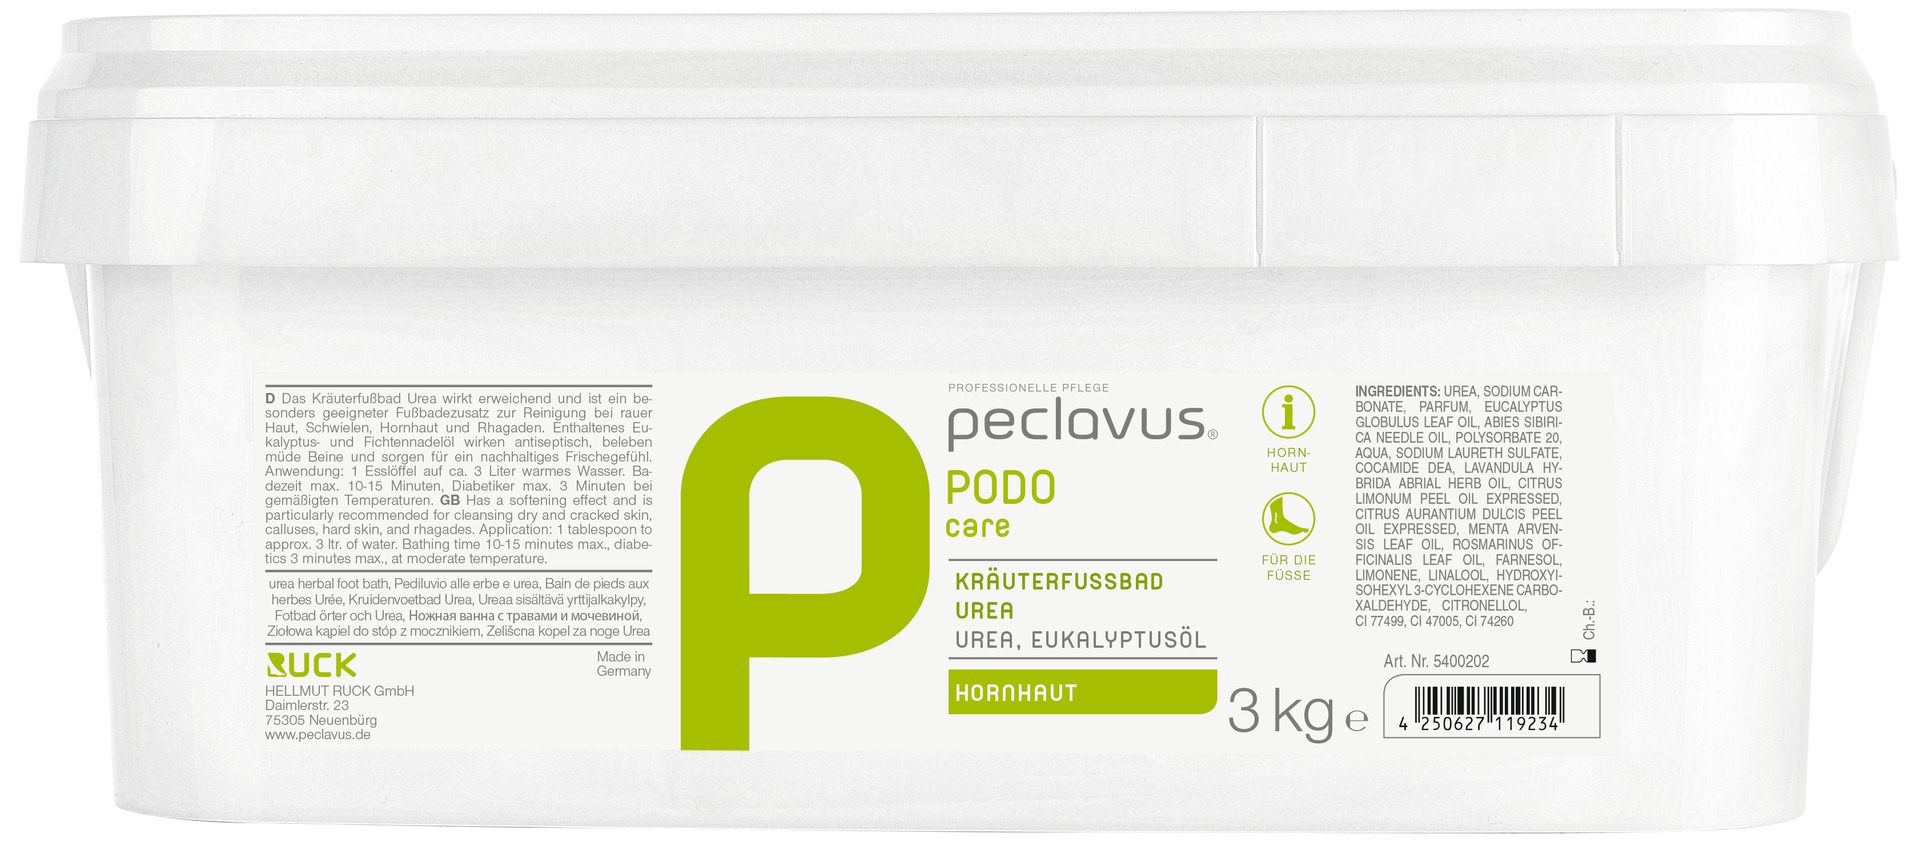 Peclavus PODOcare Kräuterfußbad Urea | 3 kg